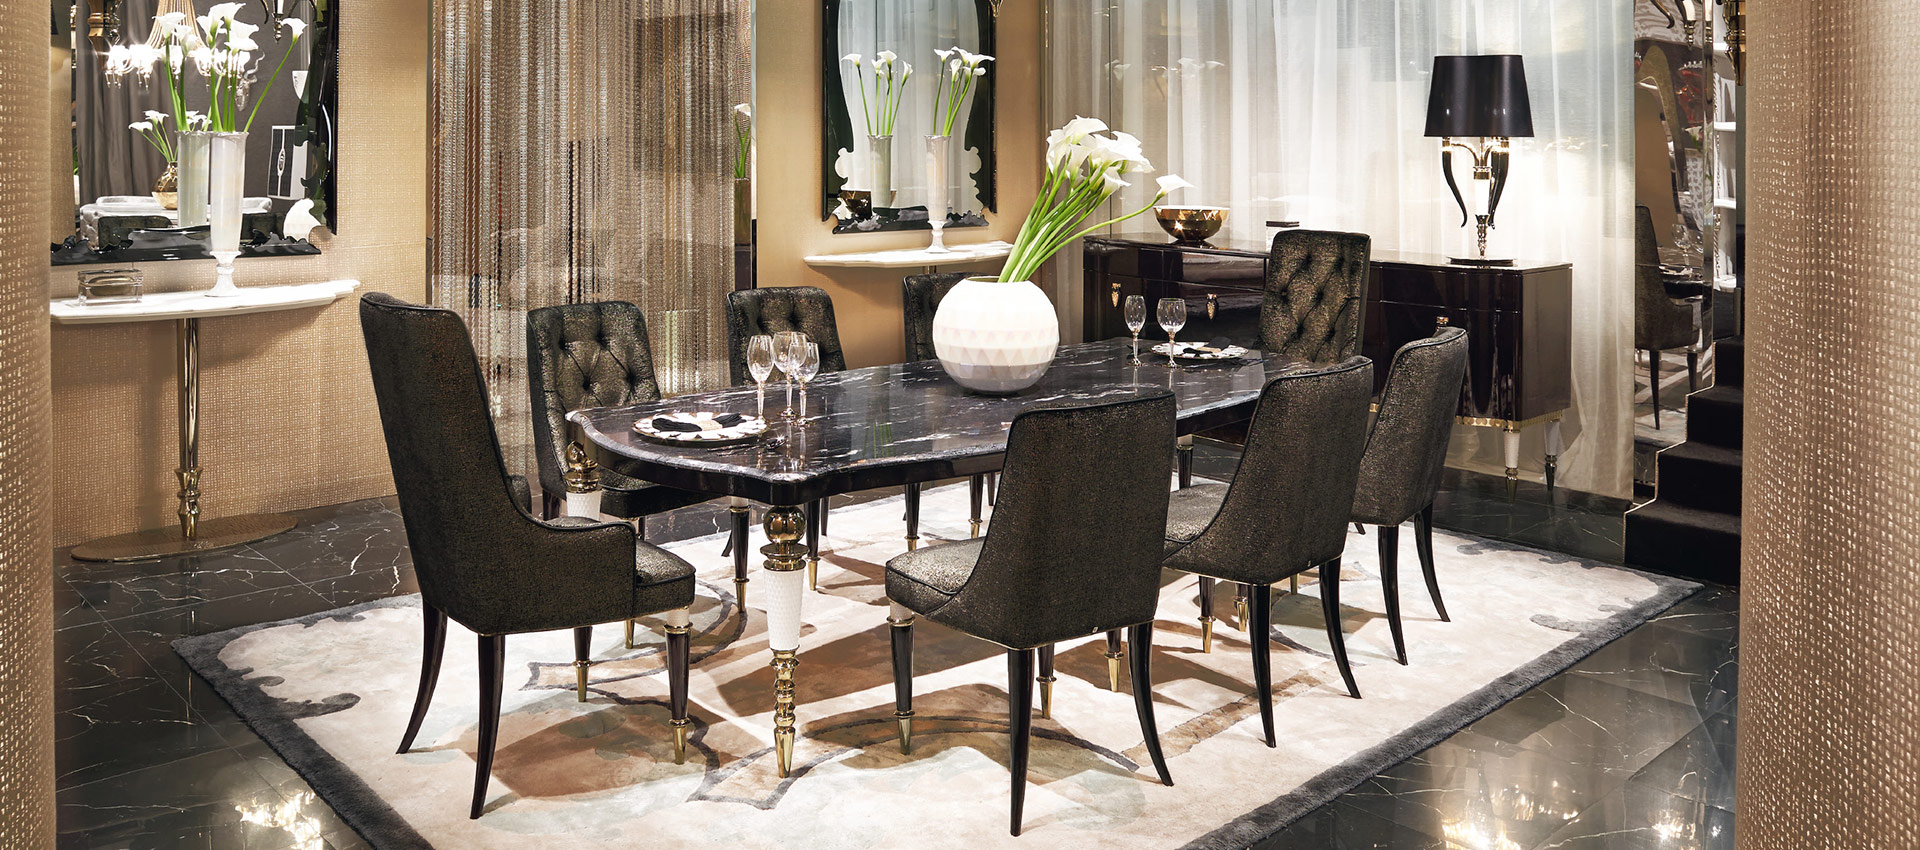 luxury furniture visionnaire